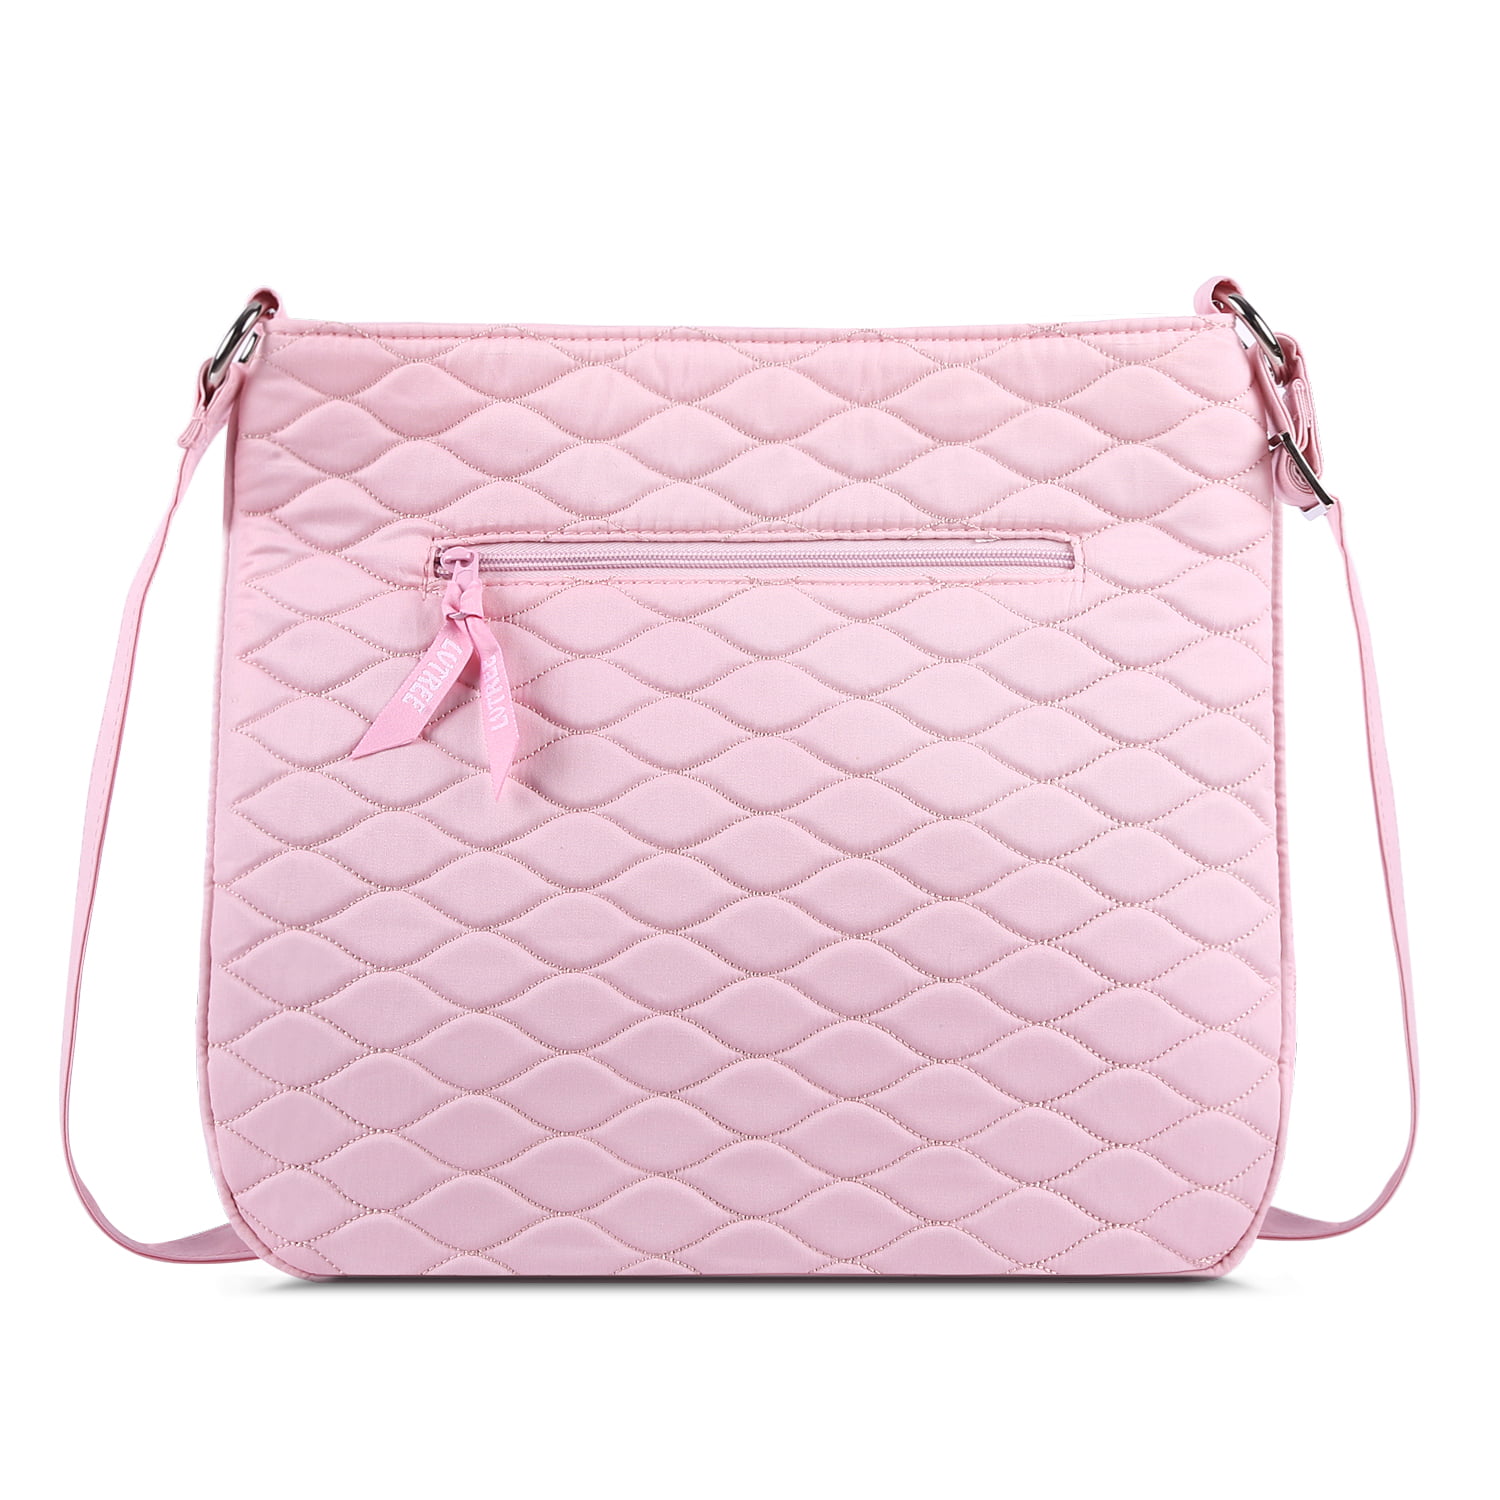 Lvtree Tote Shoulder Bag Handbag PU Leather Top Handle Women Fashion Briefcase Purse Wallets Satchel 